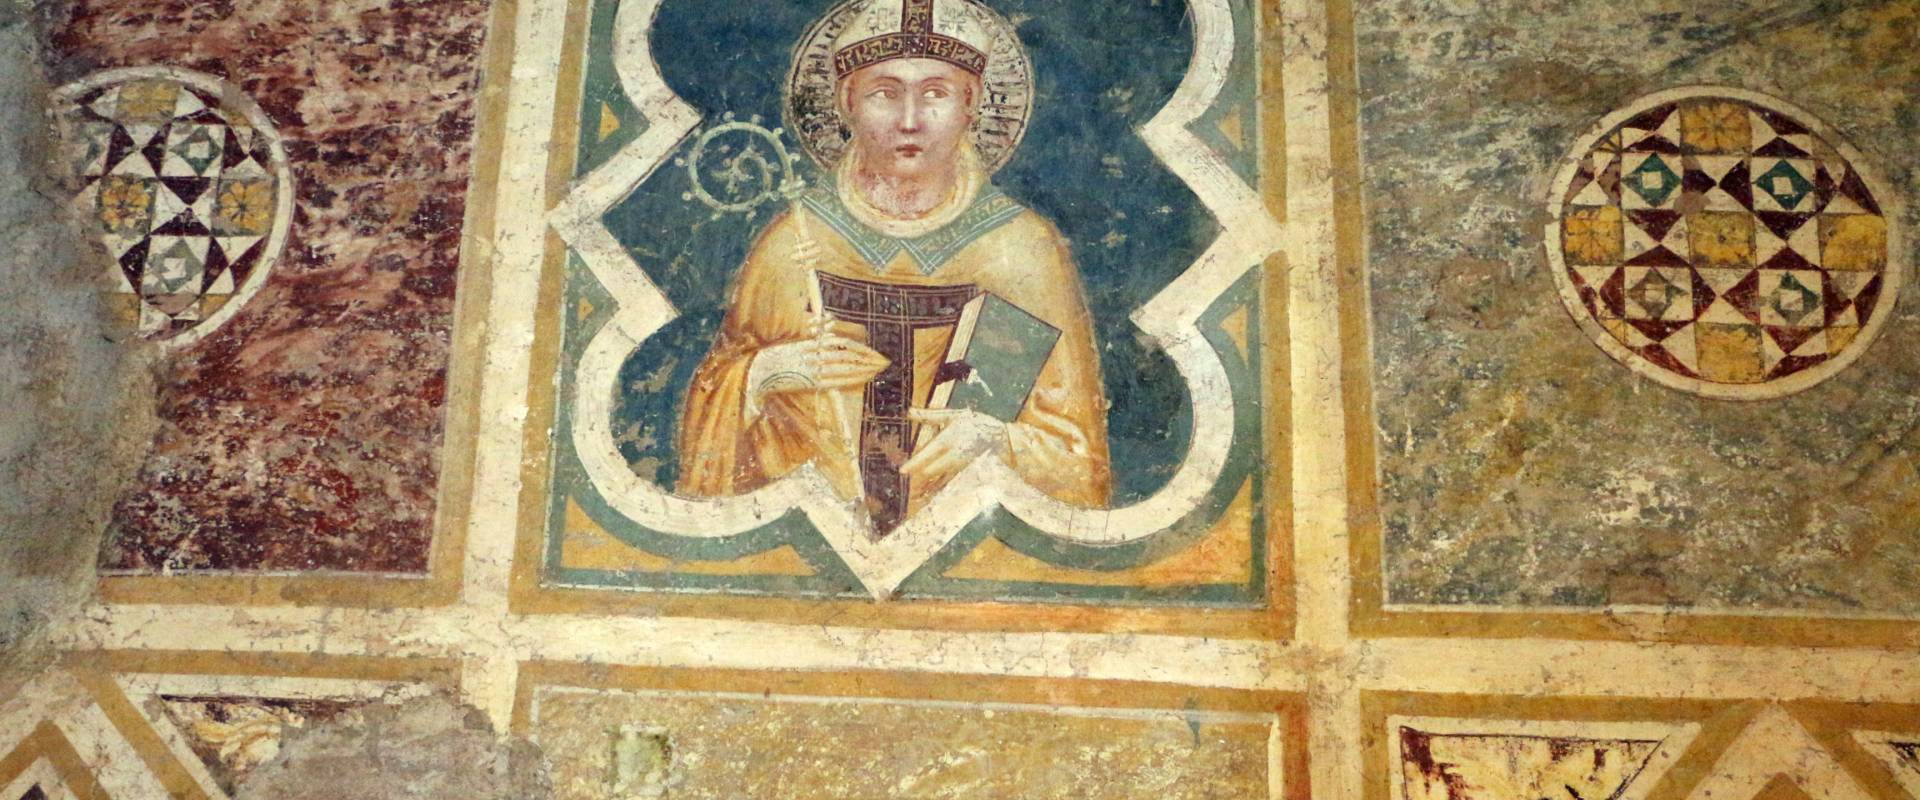 Scuola riminese, affreschi geometrici con bustini di santi, 1350-1400 ca. 02 foto di Sailko